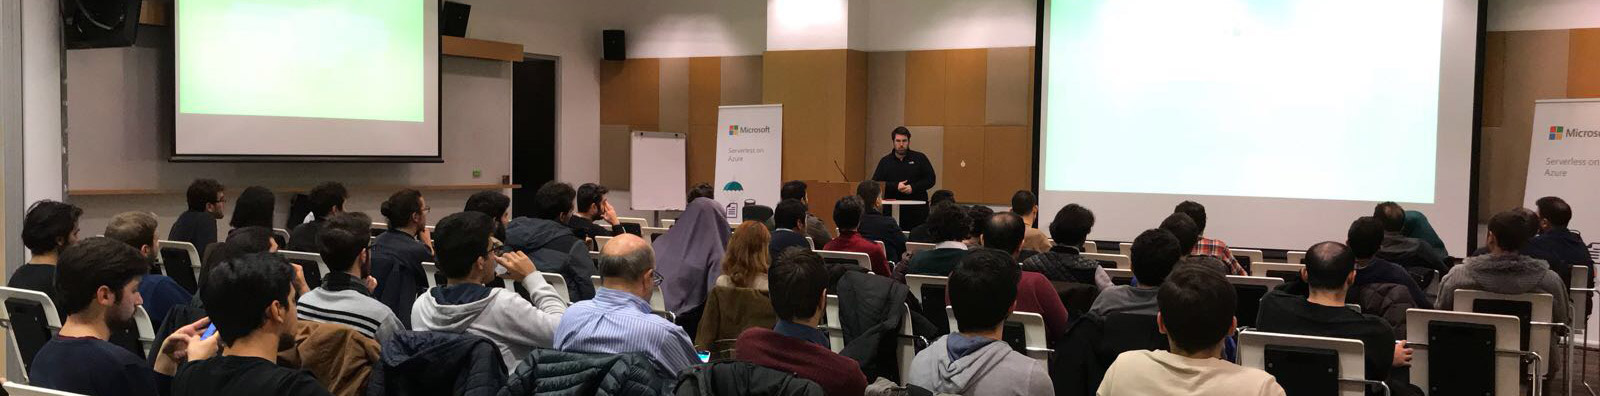 Serverless at Microsoft Entrepreneurship Meetup December 2017